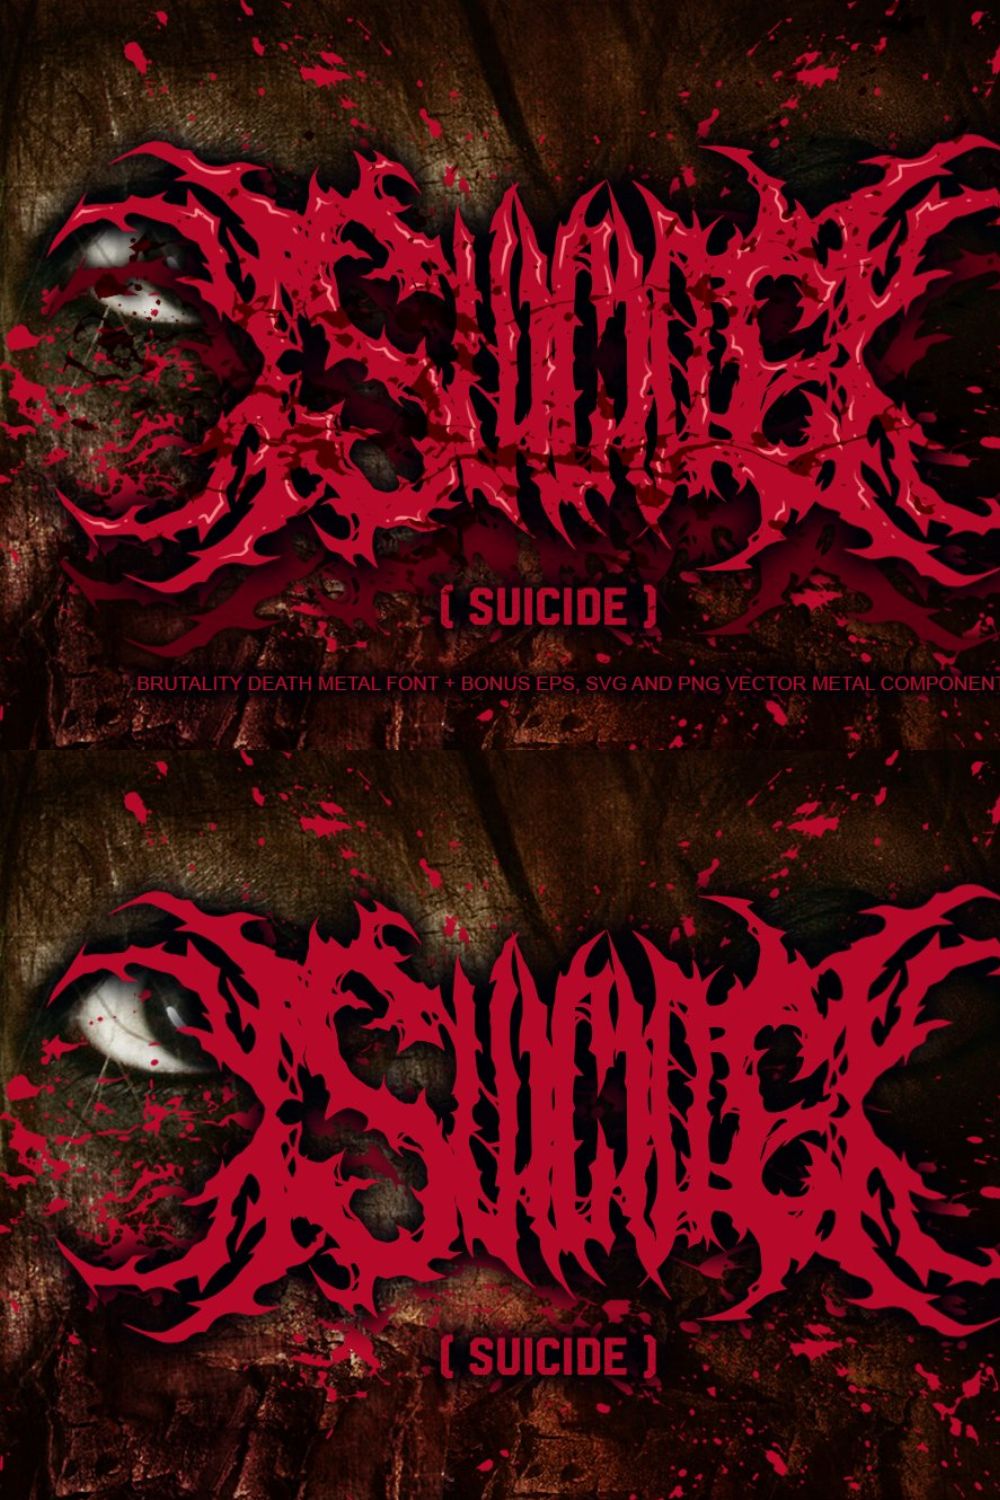 SUICIDE (brutal death metal font #2) pinterest preview image.